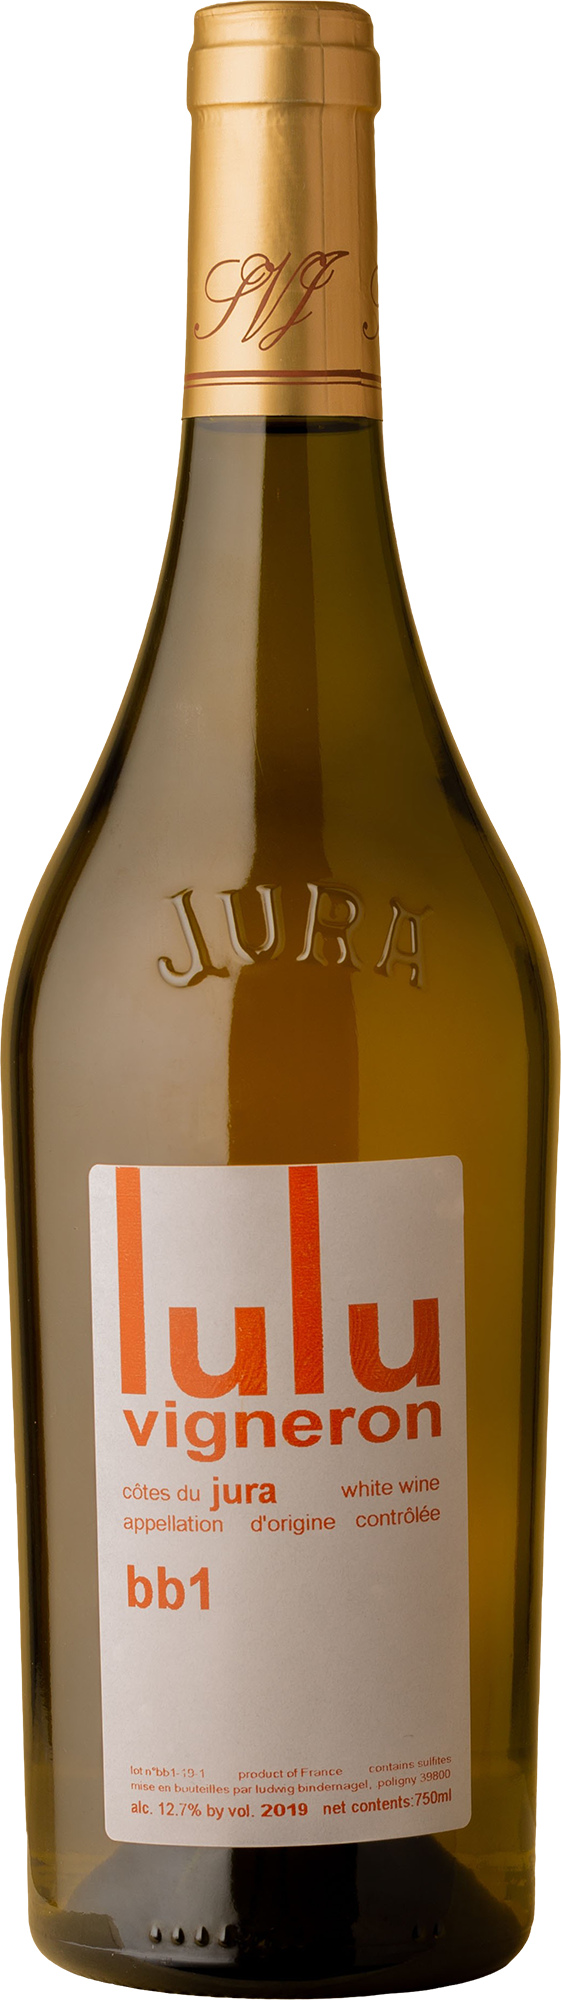 Lulu Vigneron - BB1 Chardonnay / Savagnin 2019 White Wine